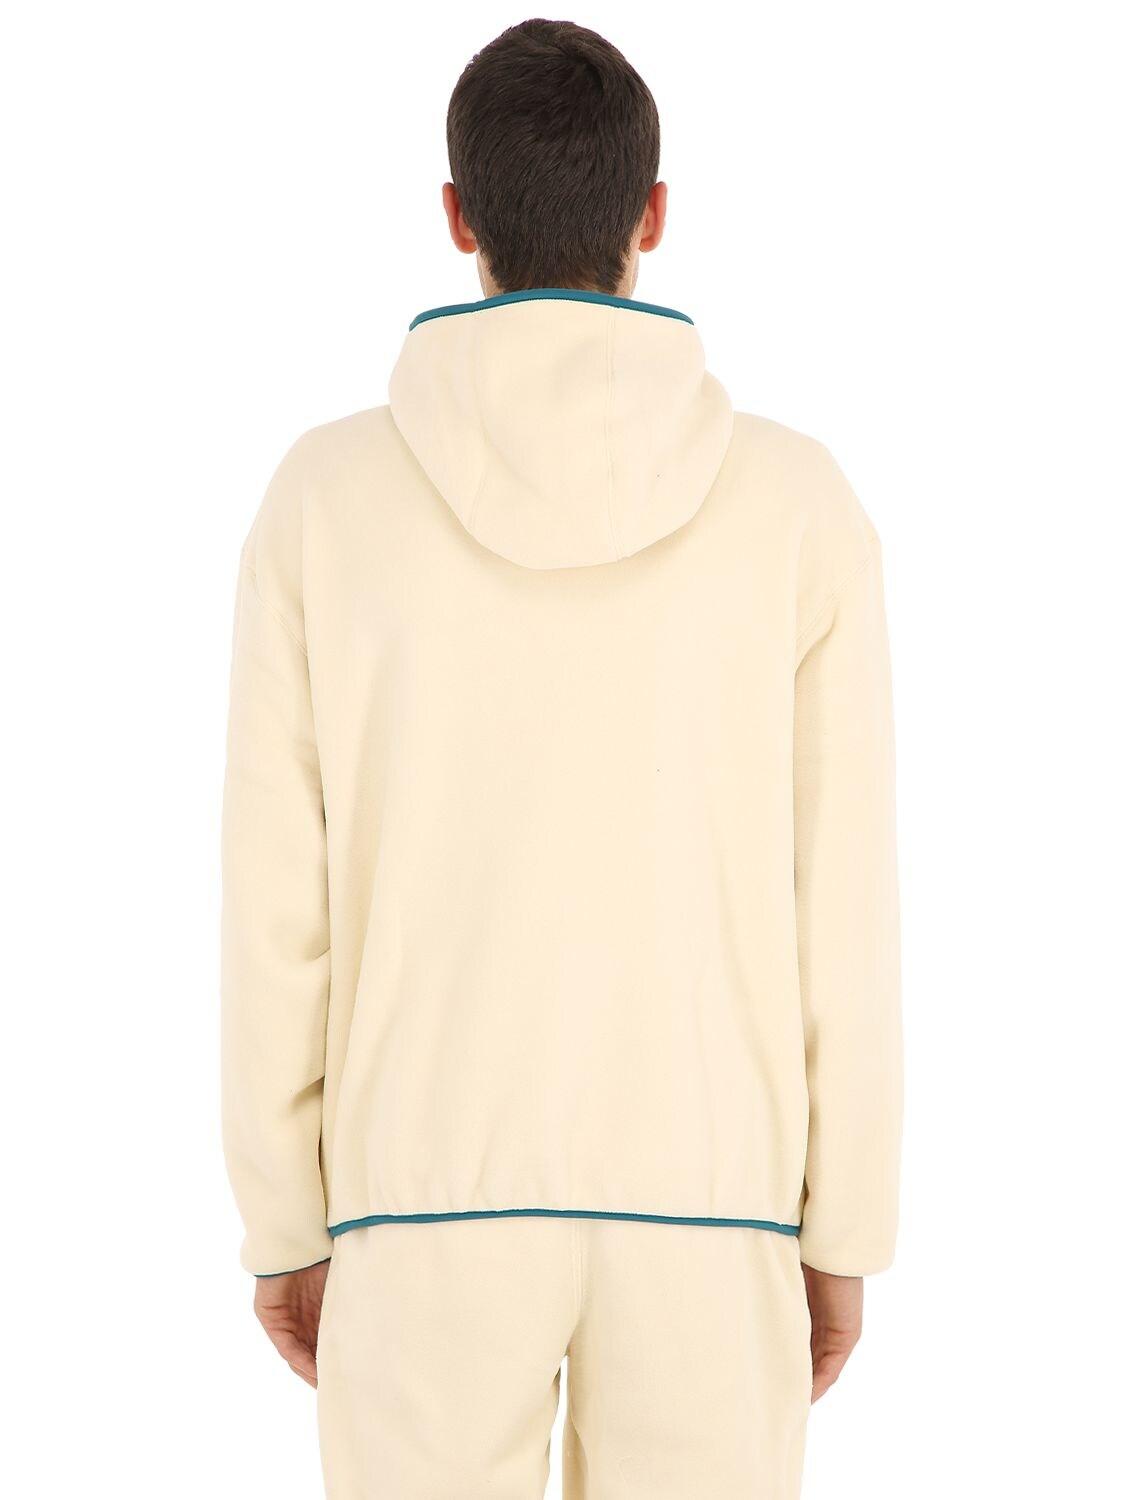 Nike Men’s Yoga Sherpa Pinnacle Half-Zip Sweatshirt Fleece Green LARGE NWT 0